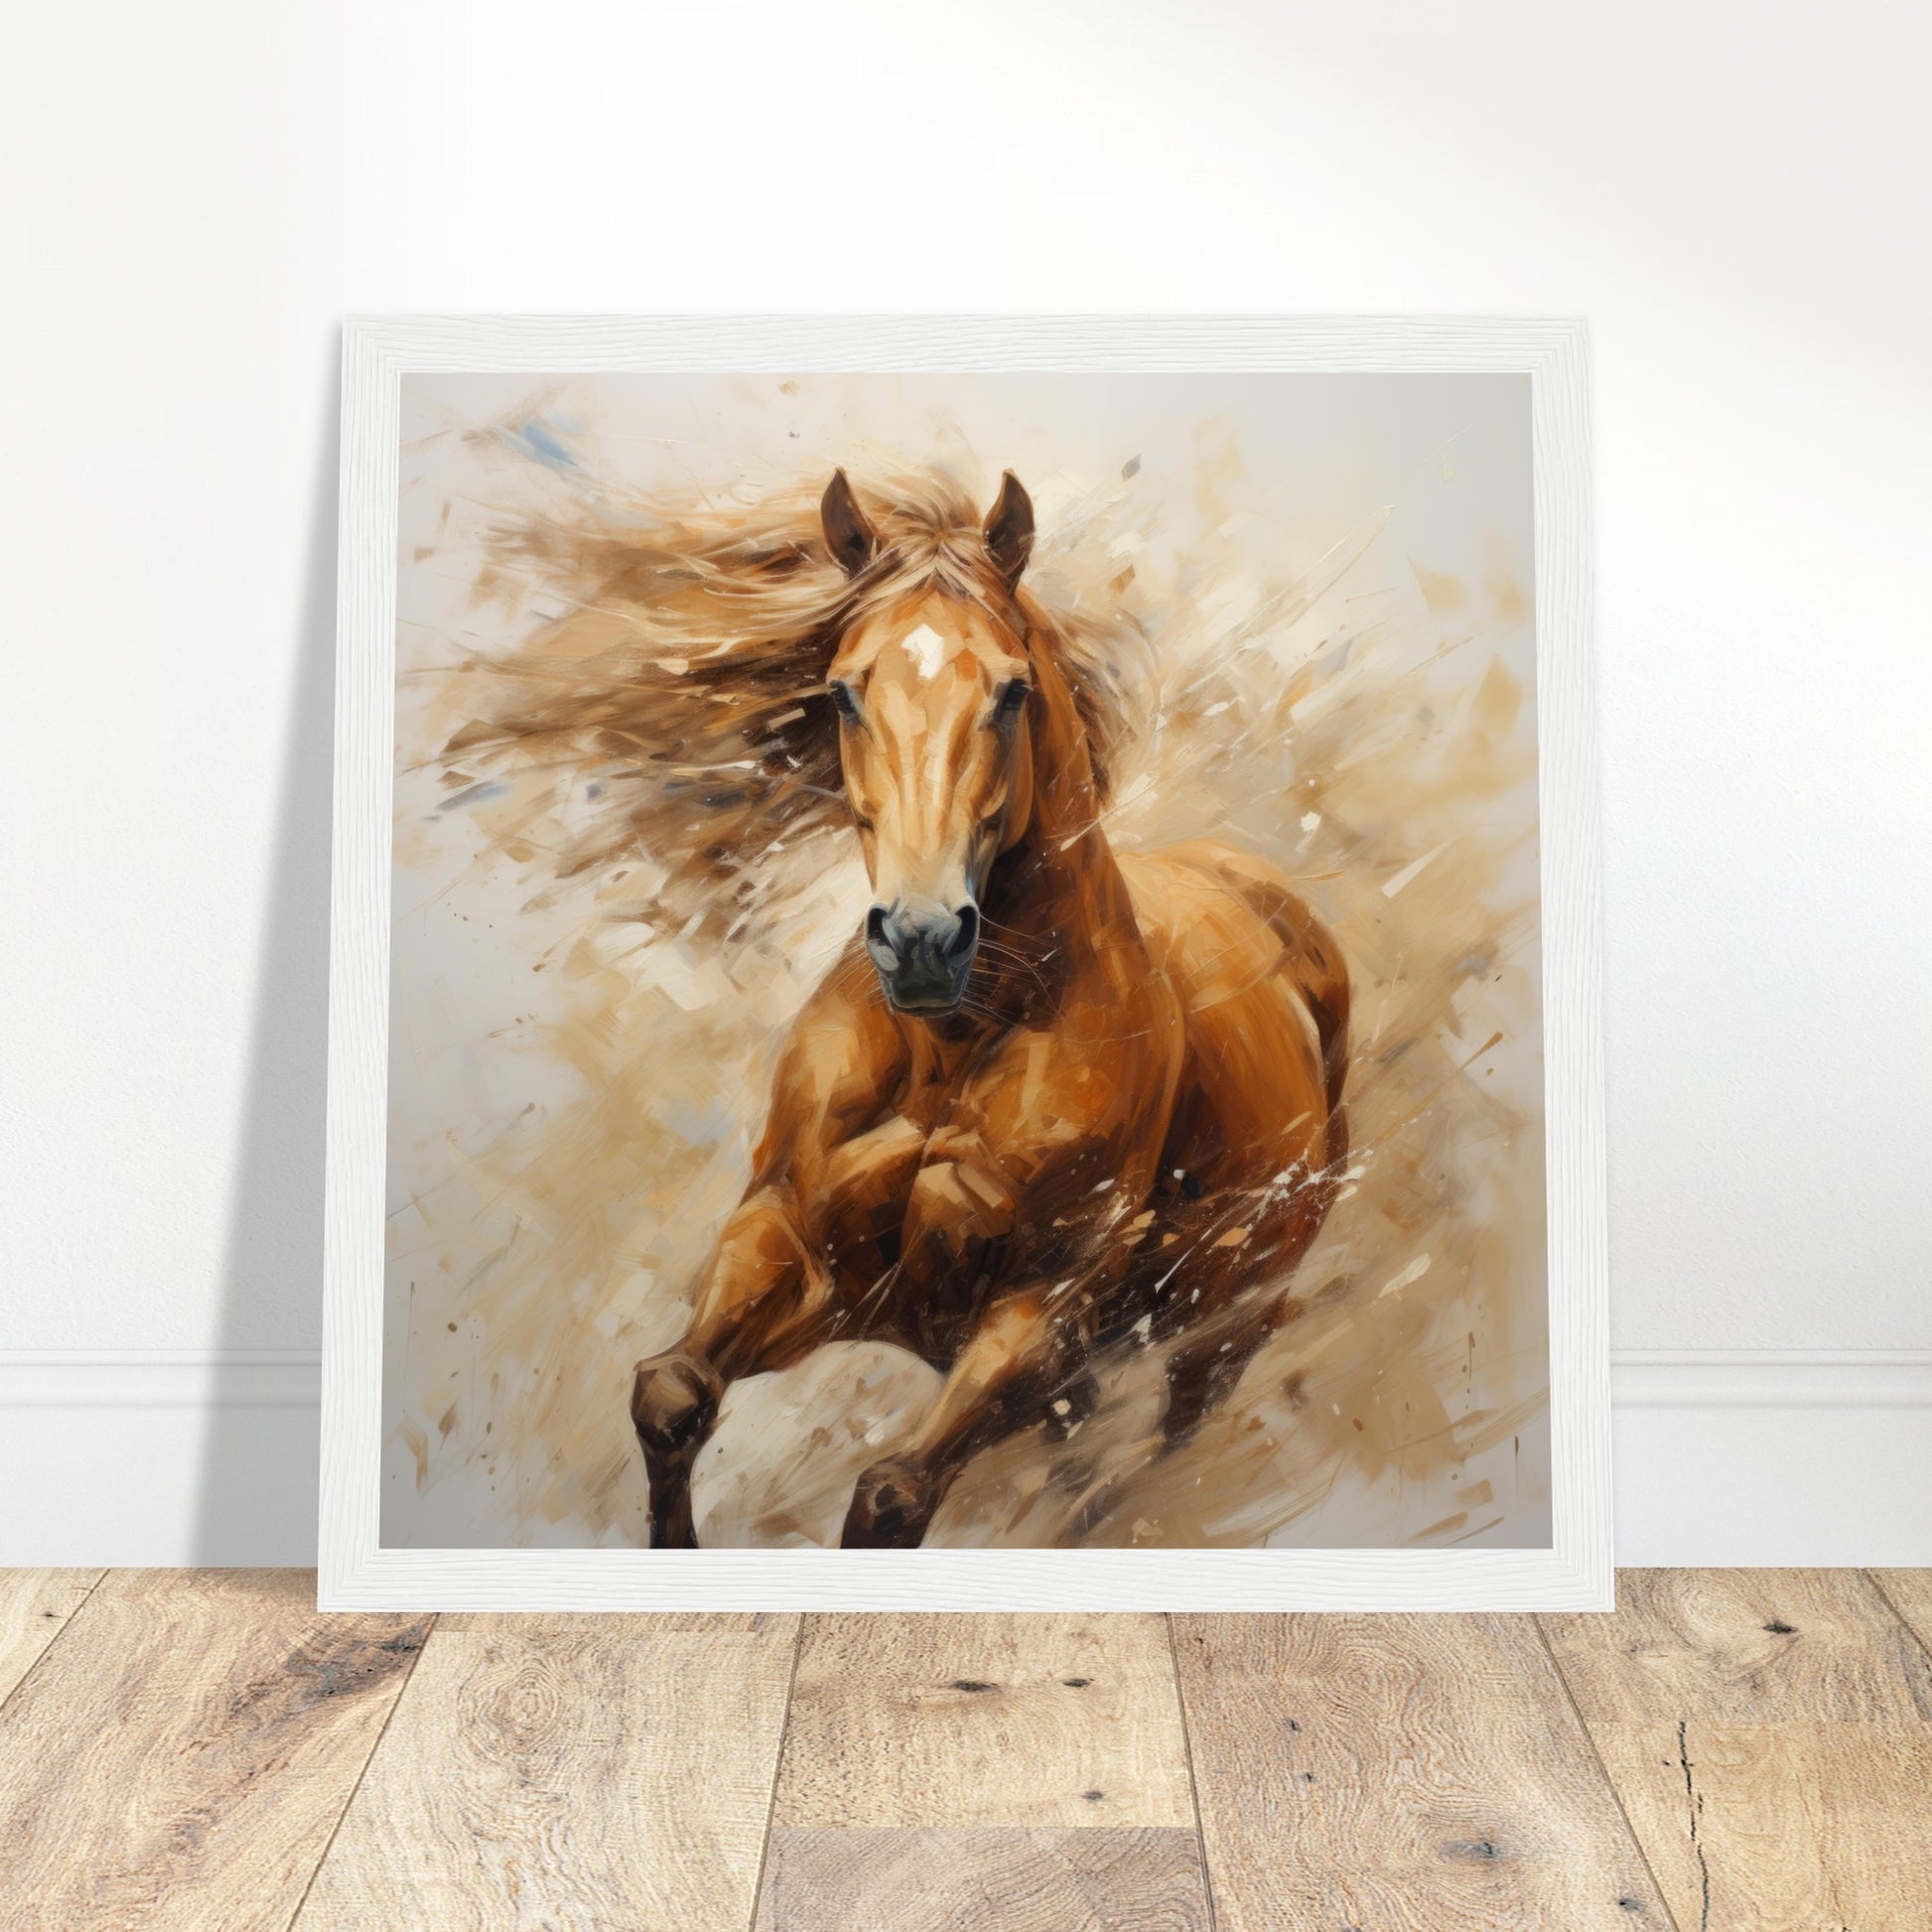 Equine Beauty #15 - Print Room Ltd Dark wood frame 30x30 cm / 12x12"